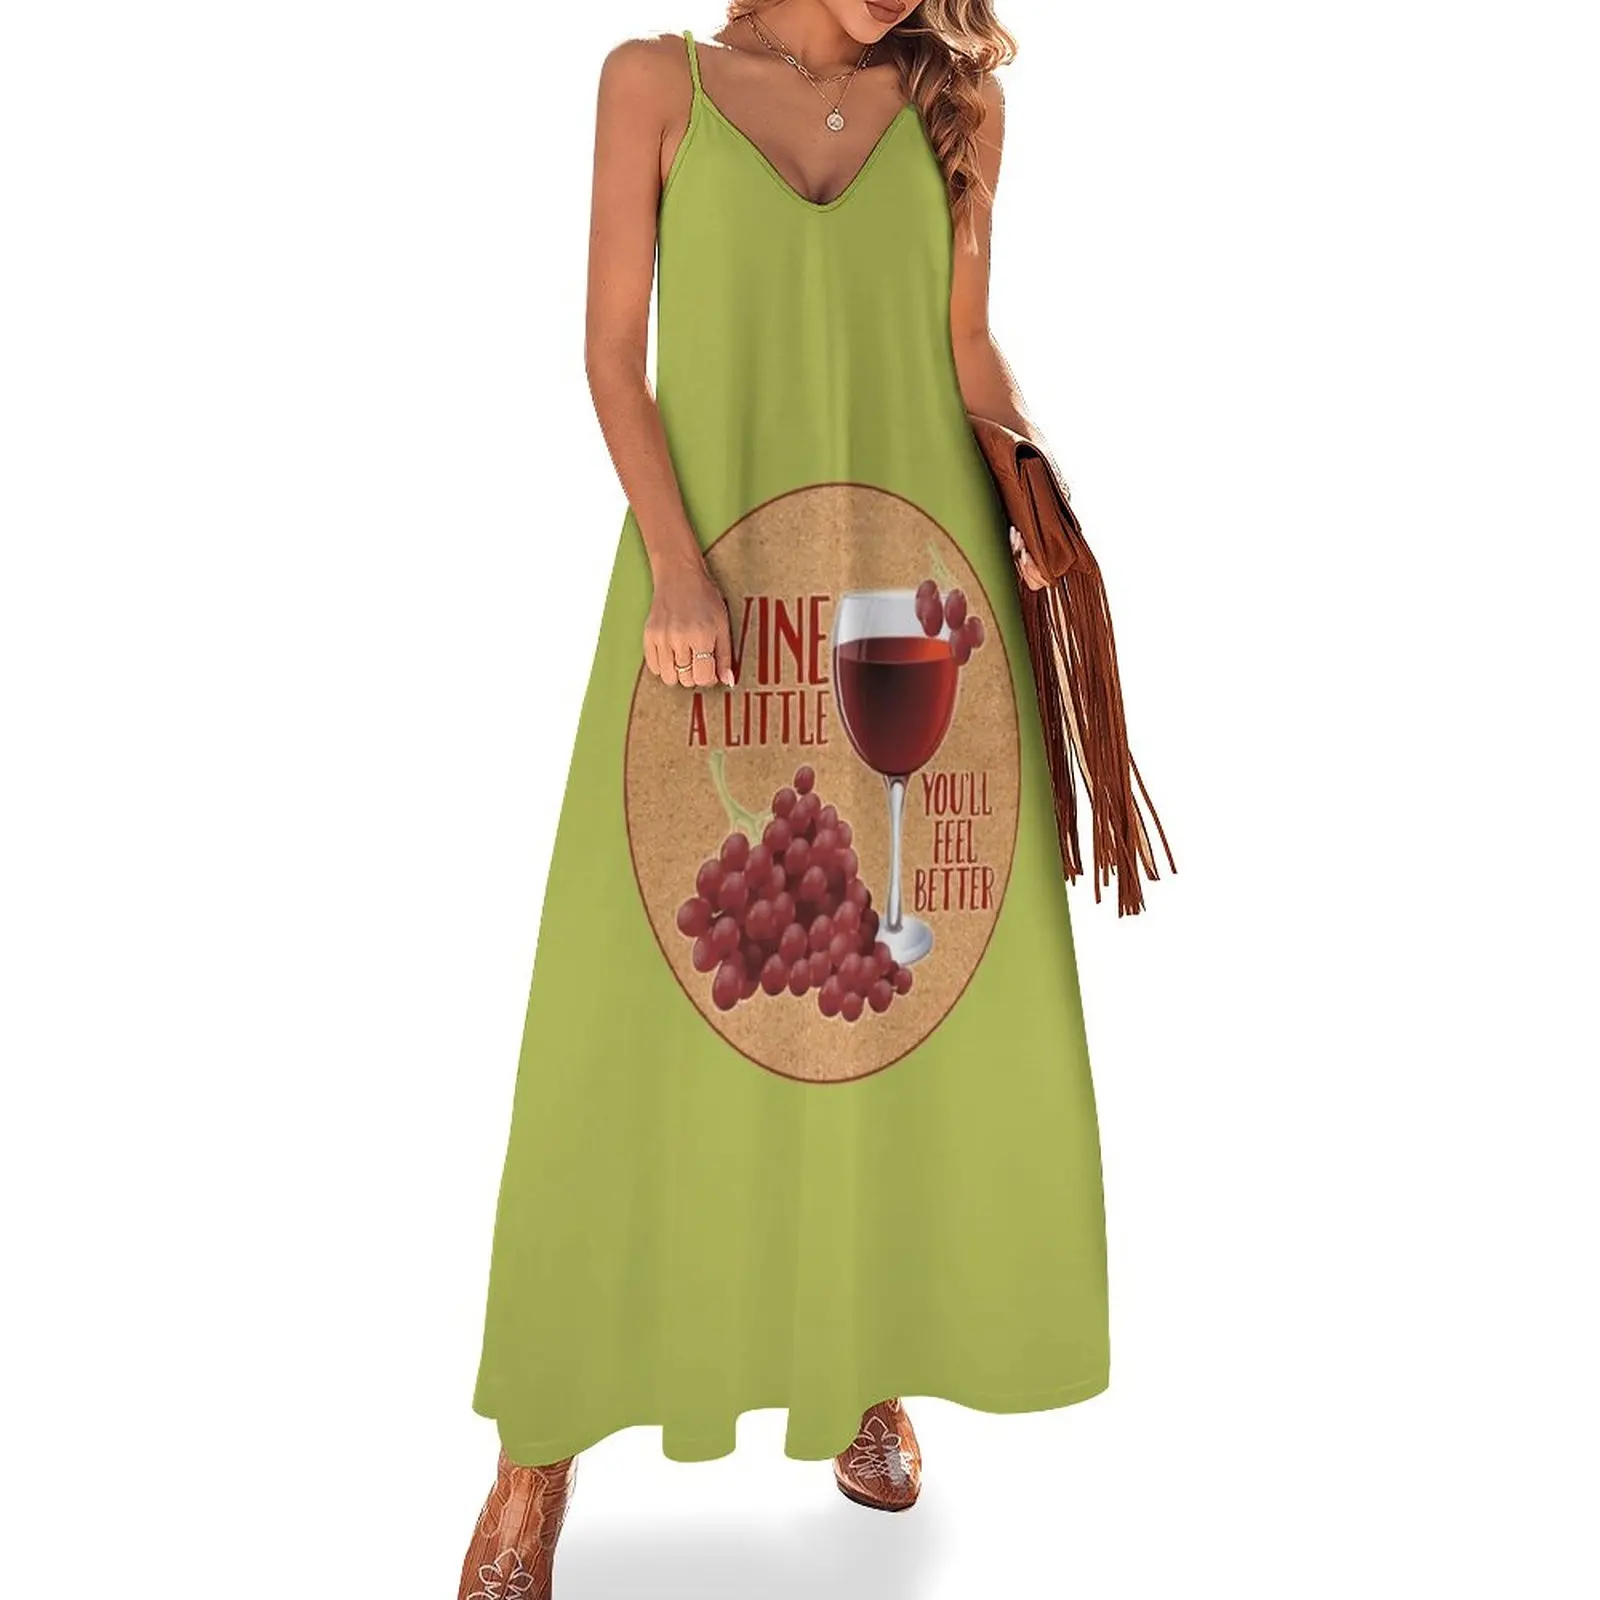 

New Wine Lovers Wine a little you'll feel better grapes wineglass design Sleeveless Dress women's summer dress 2023